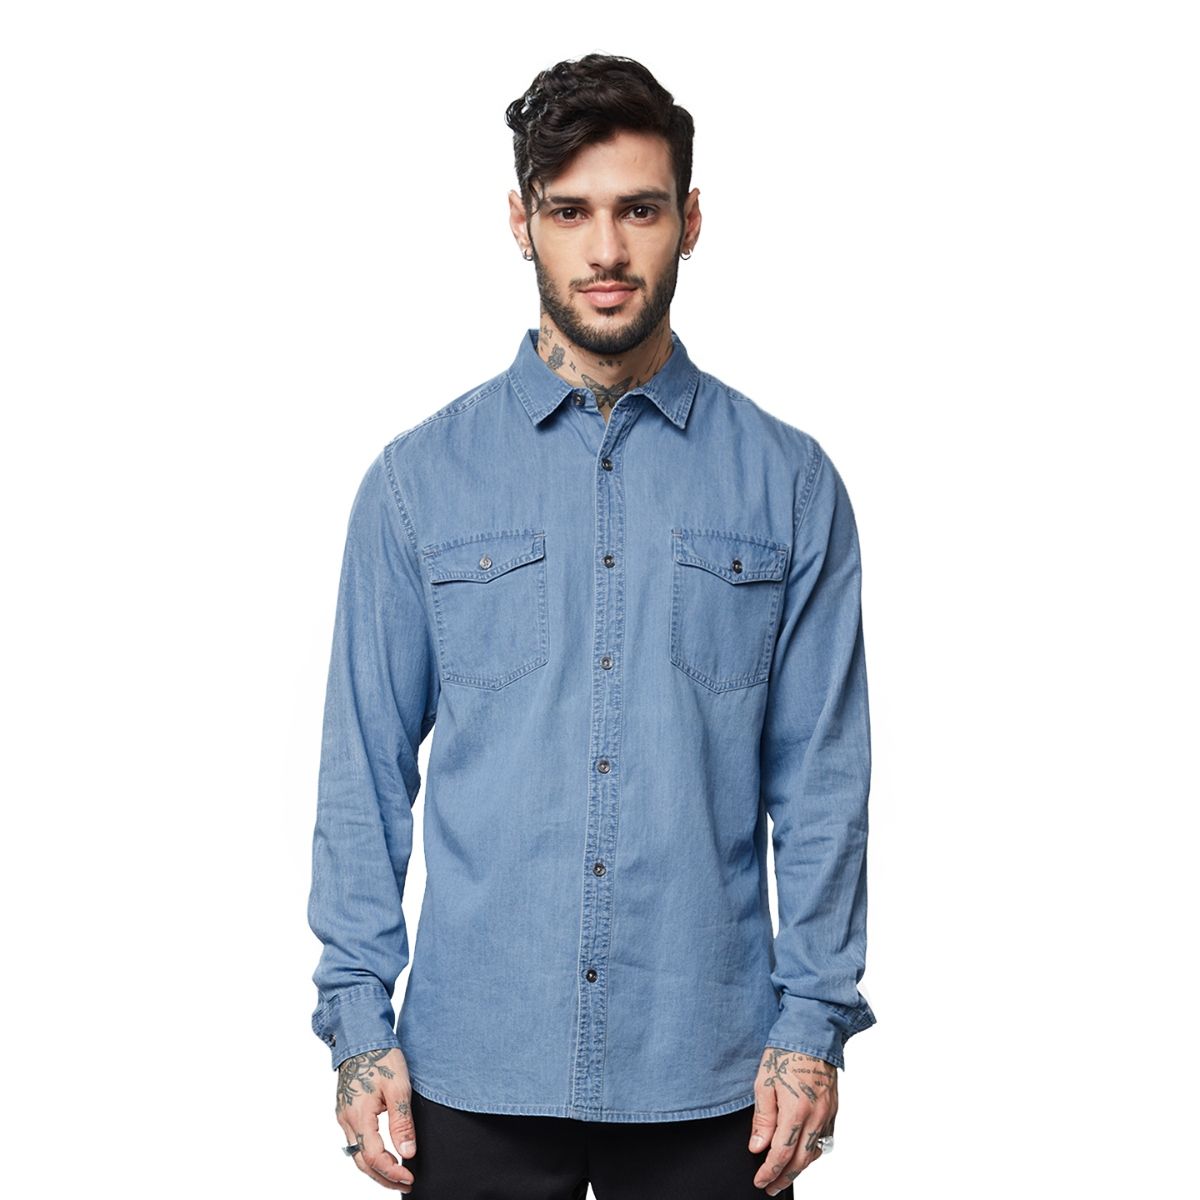 HAPIMO Round Neck Fashion Tops Casual Slim Fit Tee Clothes Long Sleeve T- Shirt for Men 3D Digital Graphic Print Blouse Men's Summer Shirts Blue XL -  Walmart.com